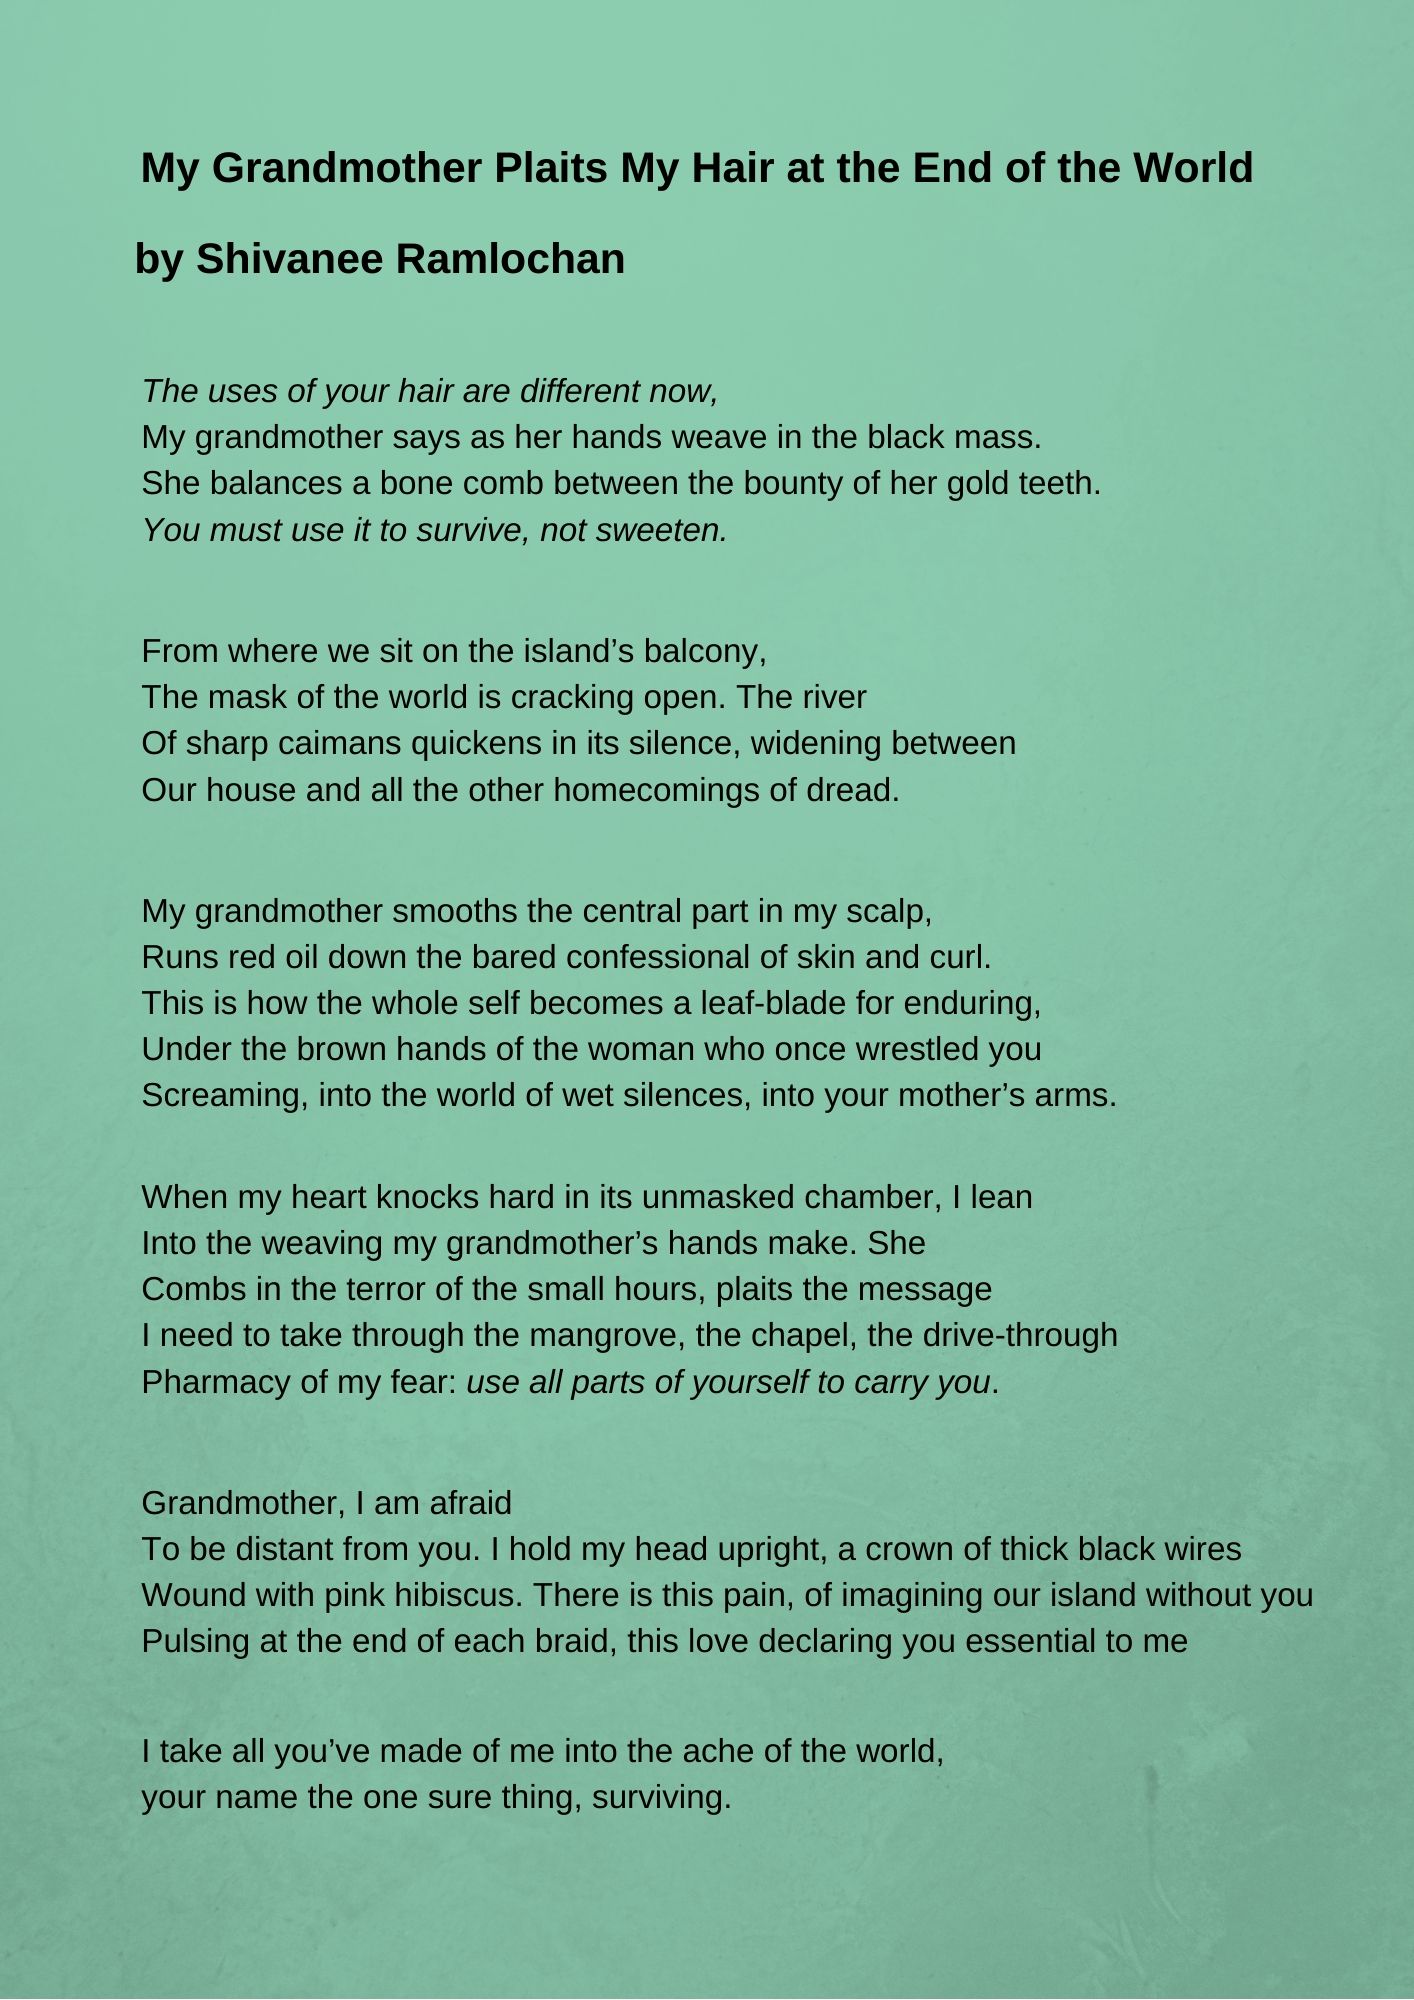 Shivanee Ramlochan poem 1